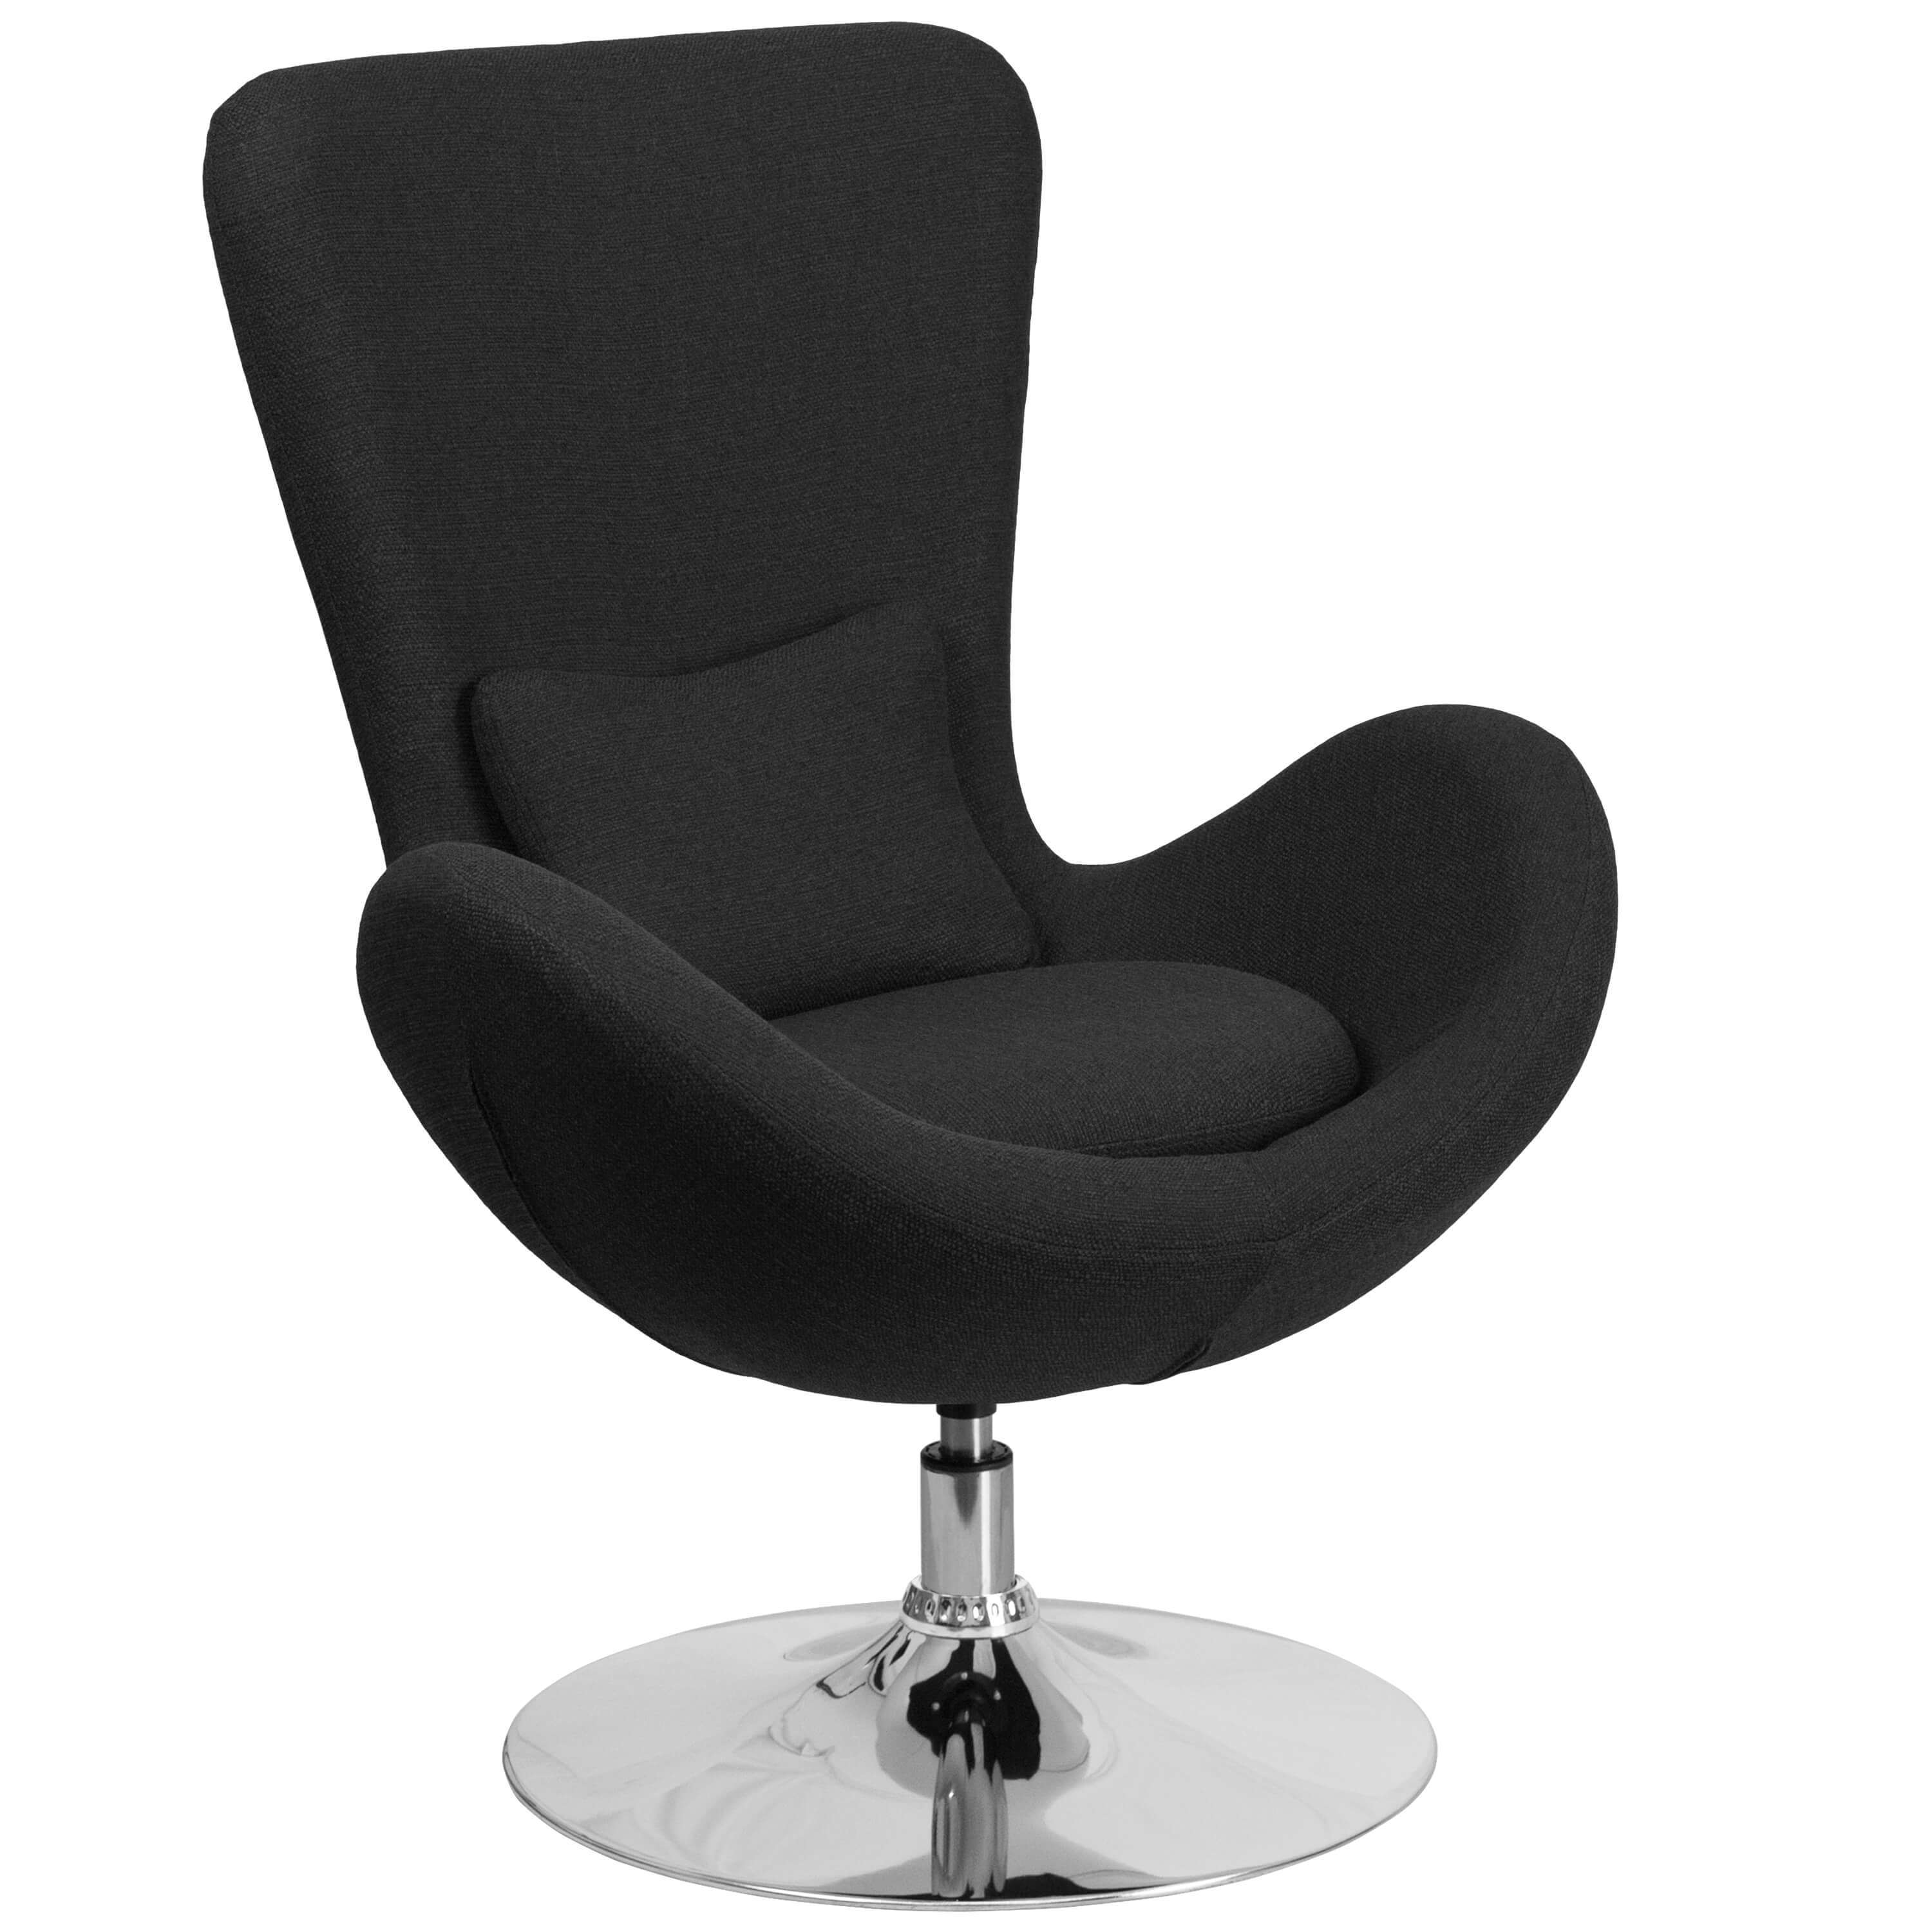 Office lounge chairs CUB CH 162430 BK FAB GG FLA